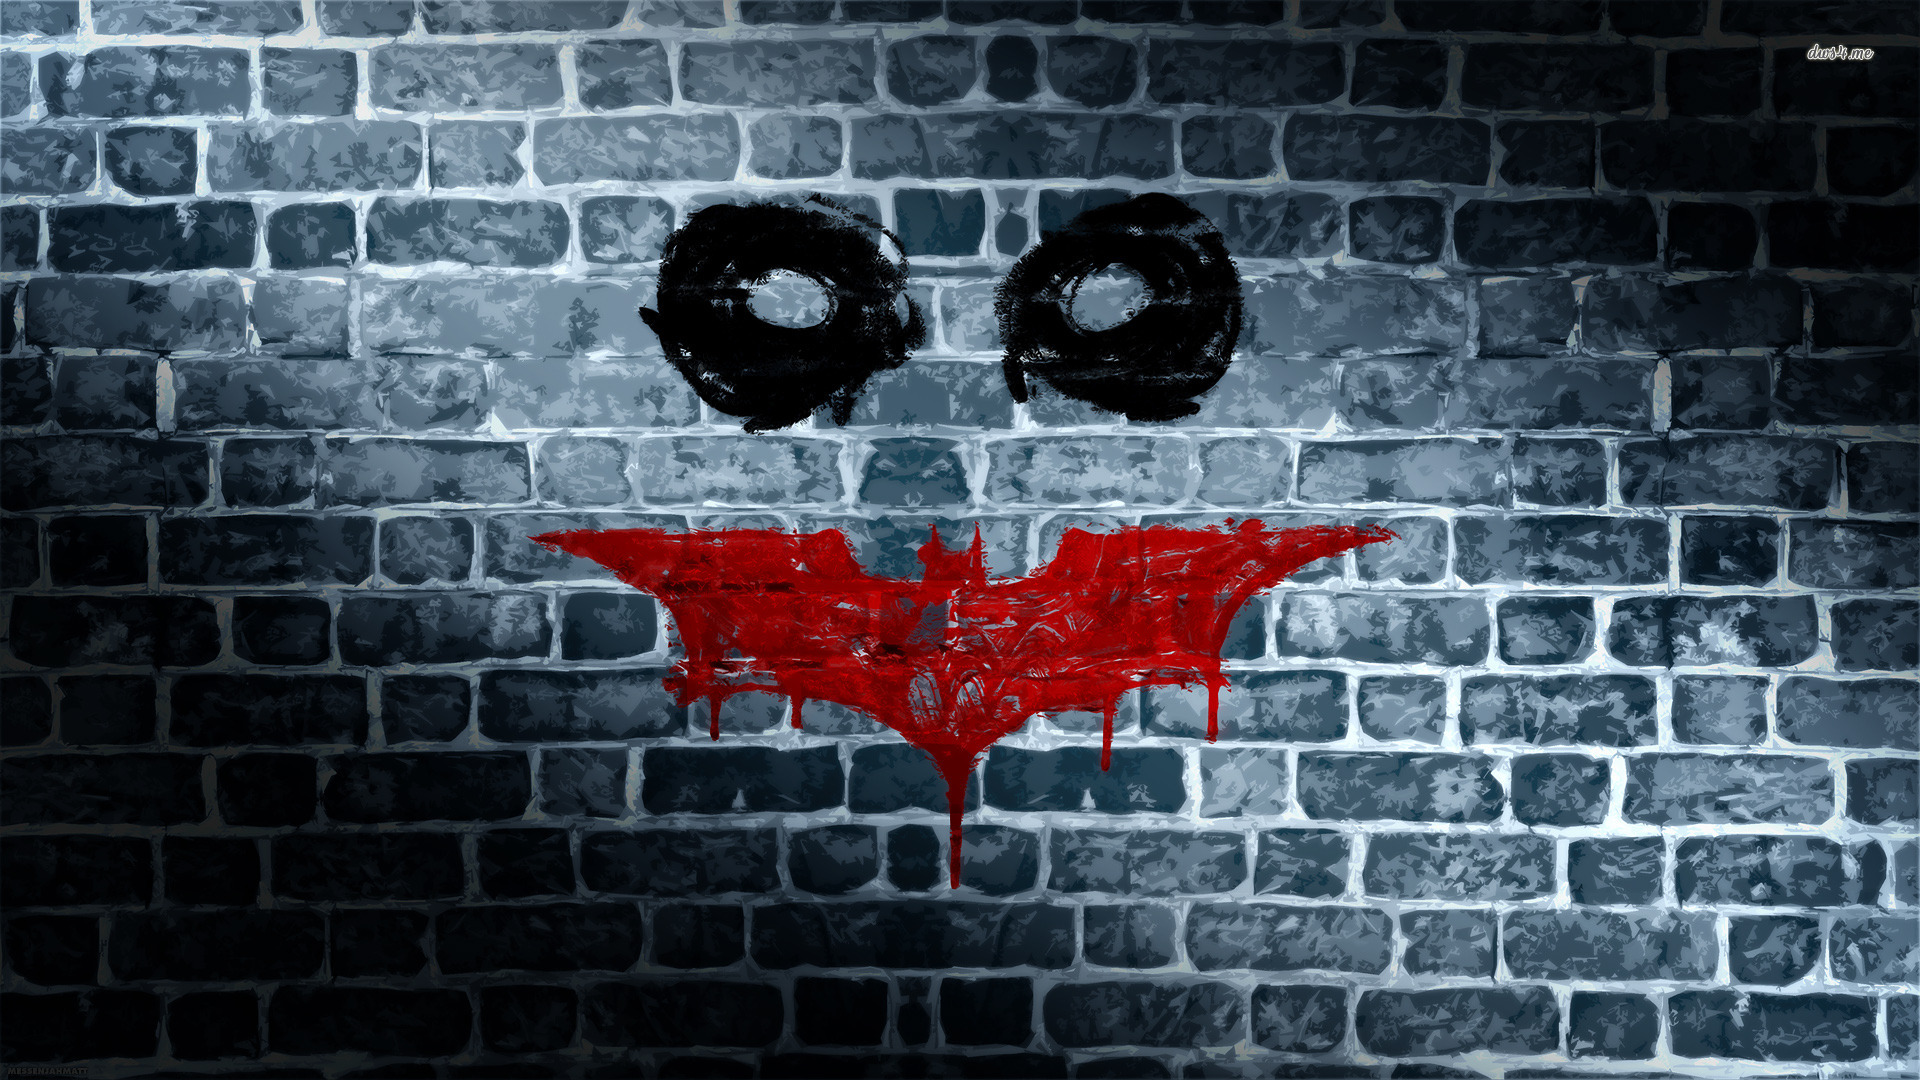 50 Batman Logo Wallpapers For Free Download HD 1080p